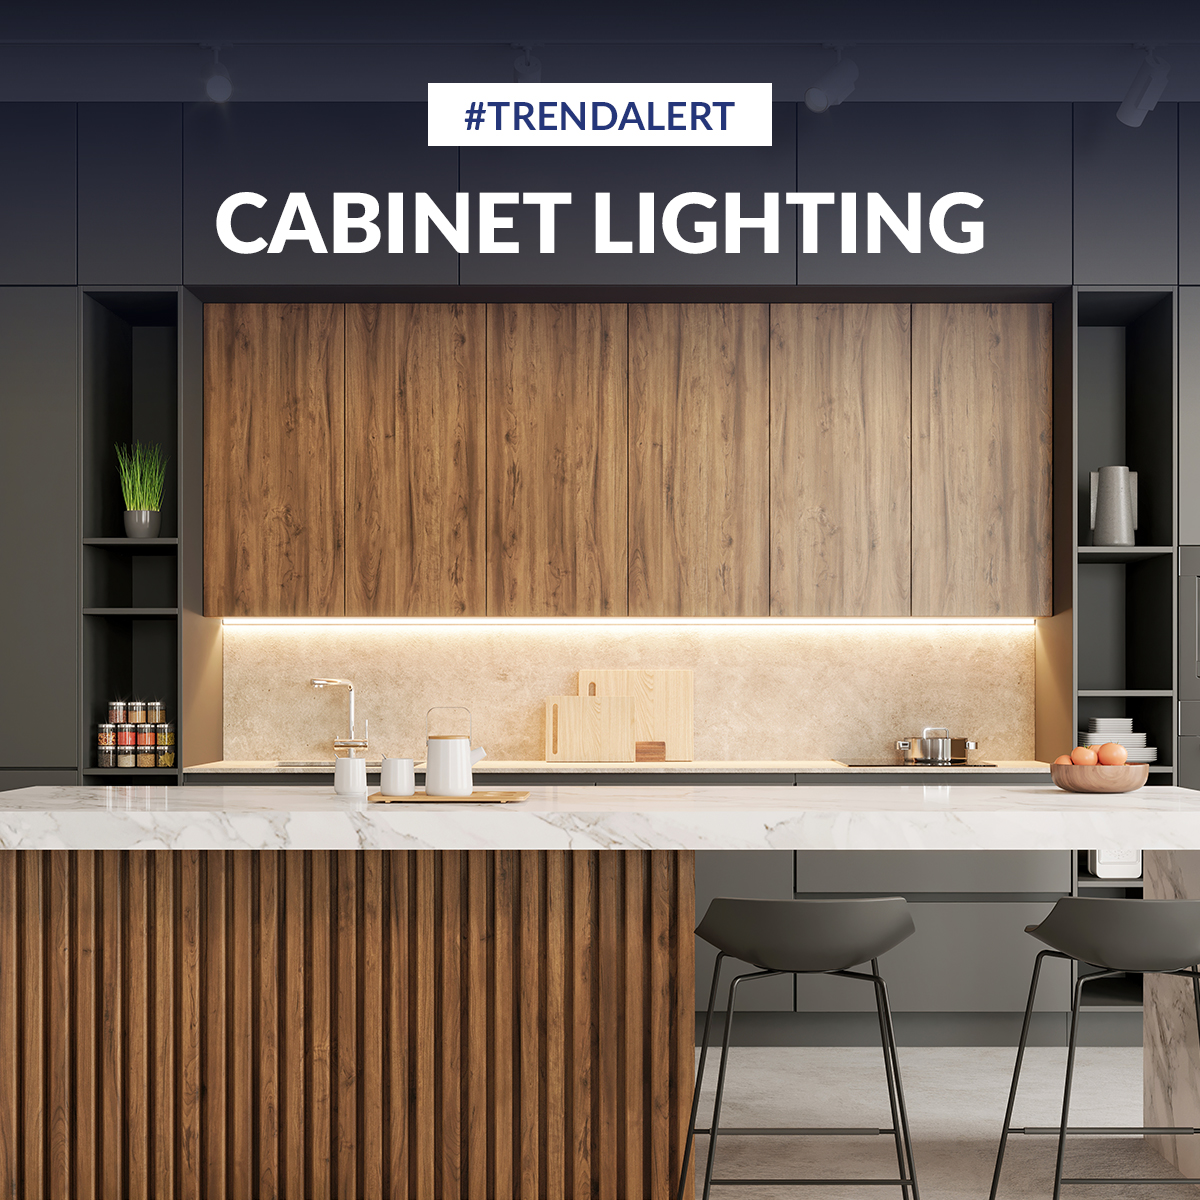 Cabinet lighting